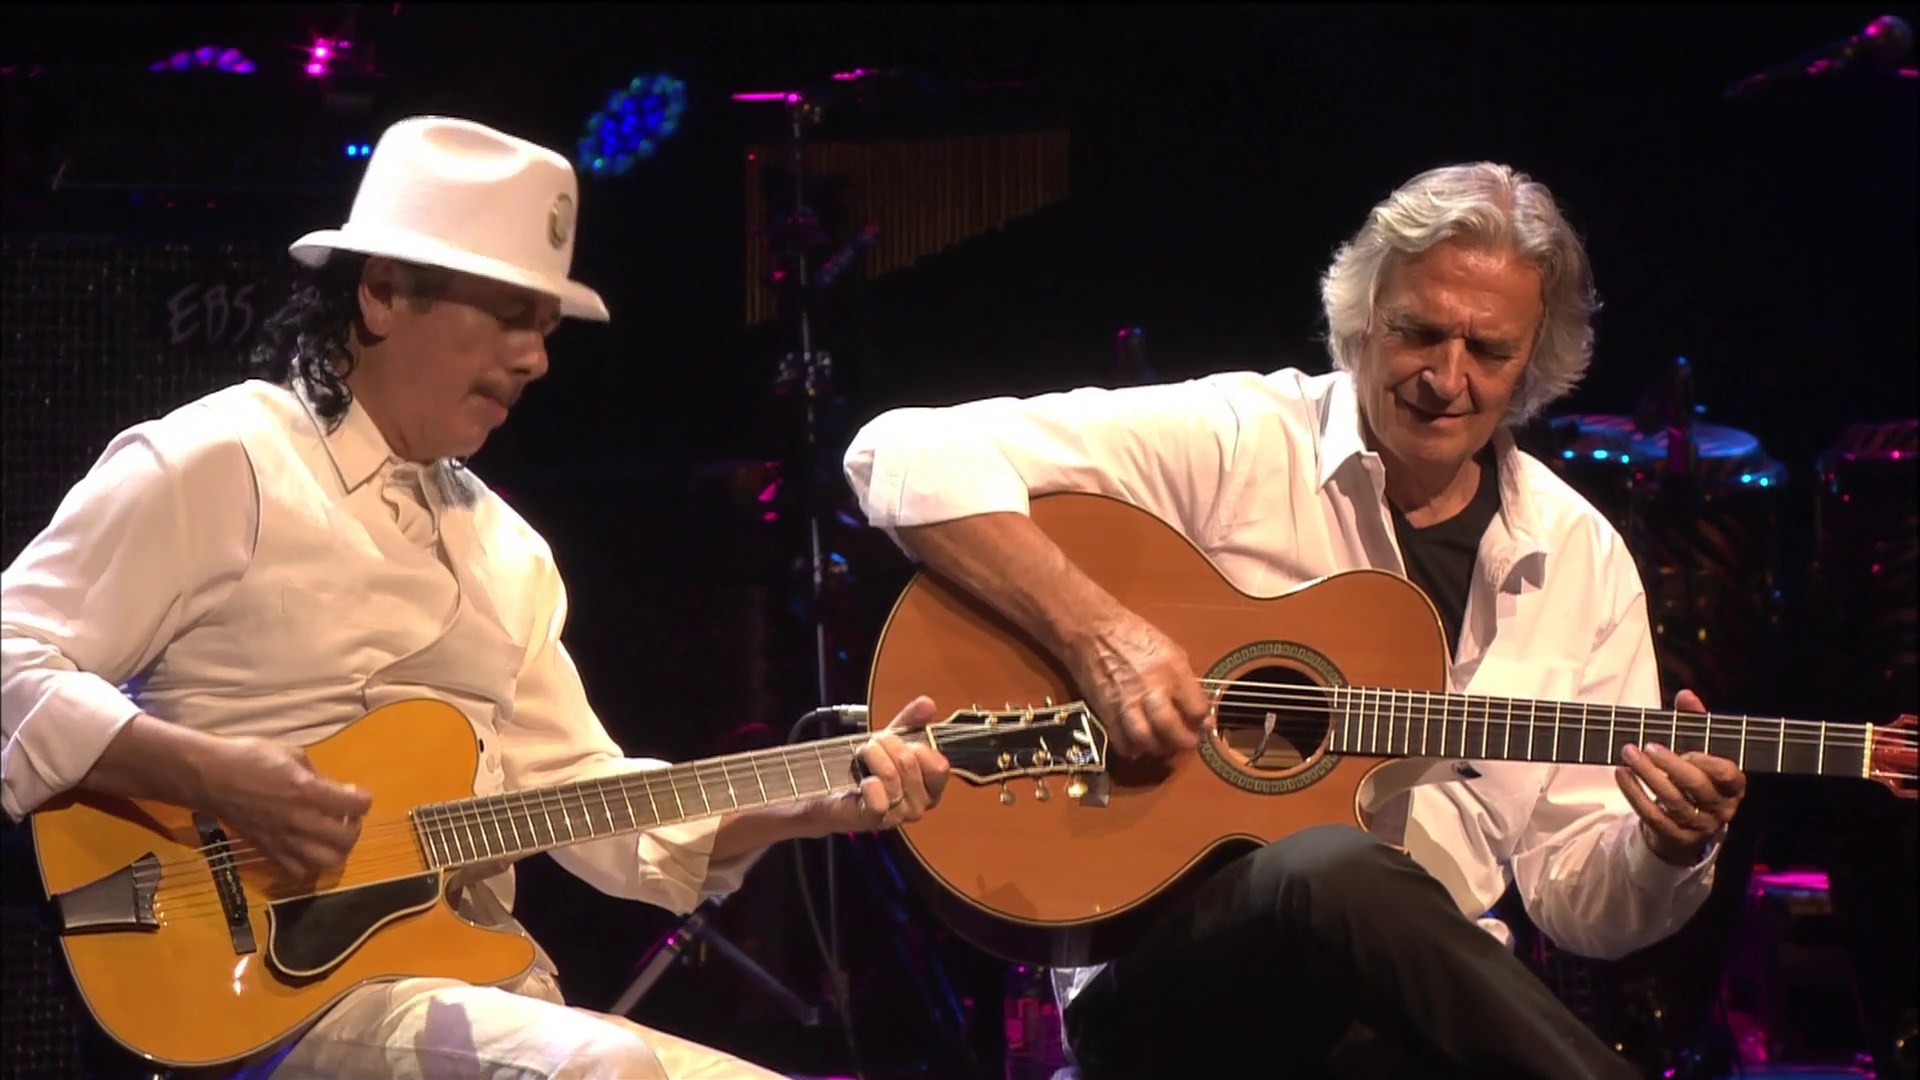 Santana.McLaughlin.Live.at.Montreux.2011.LPCM.2.0.mkv_20160317_162750.836.png